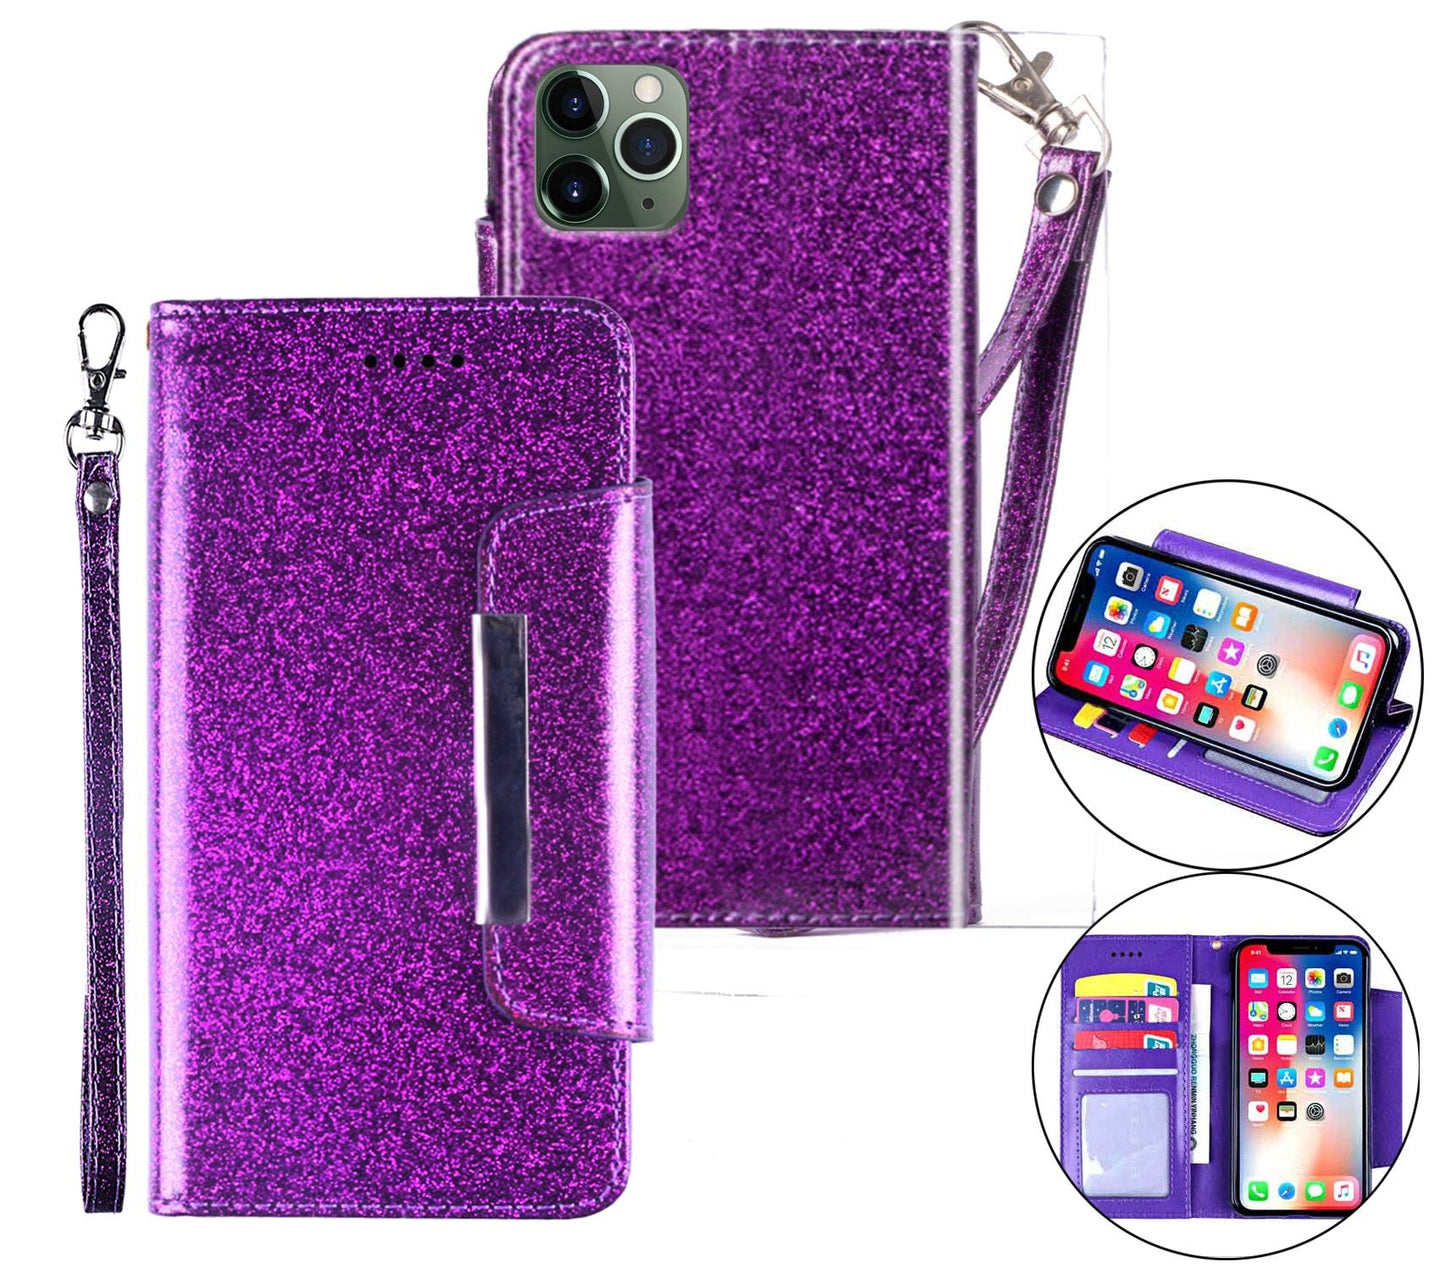 iPhone 11 Pro Max Case Wallet Cover Glitter Purple